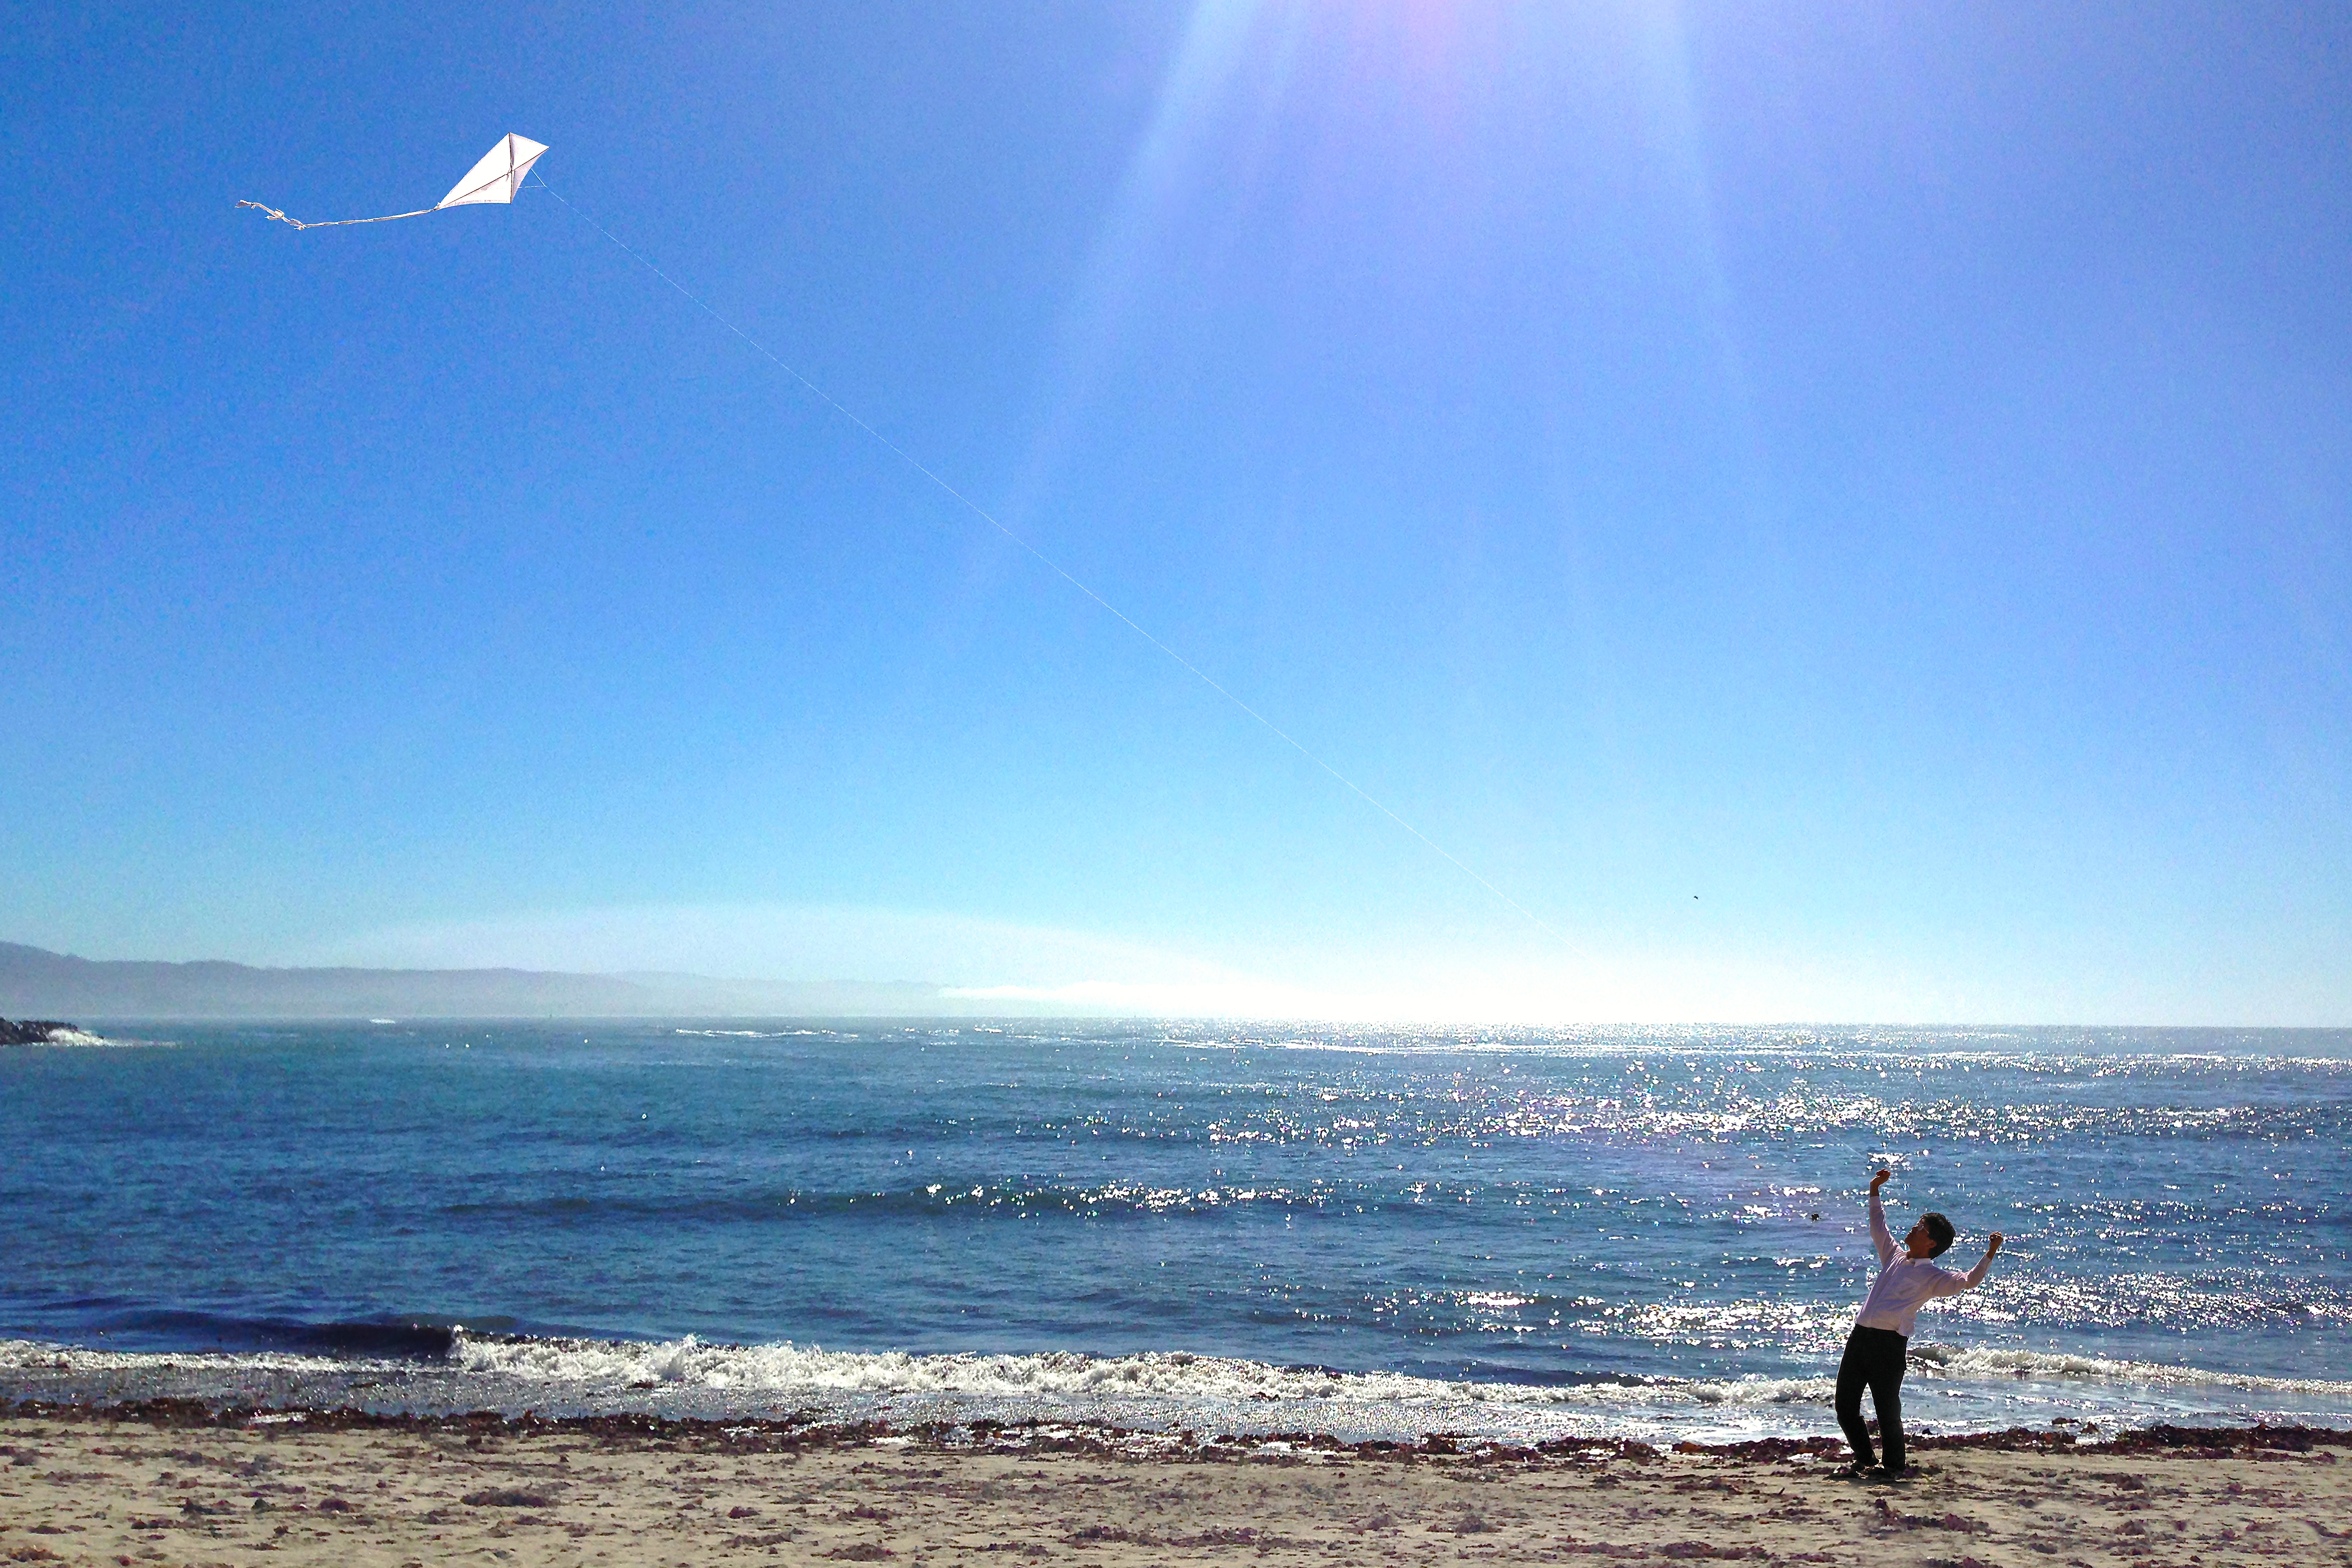 Tadashi at Halfmoon Bay flying a kite